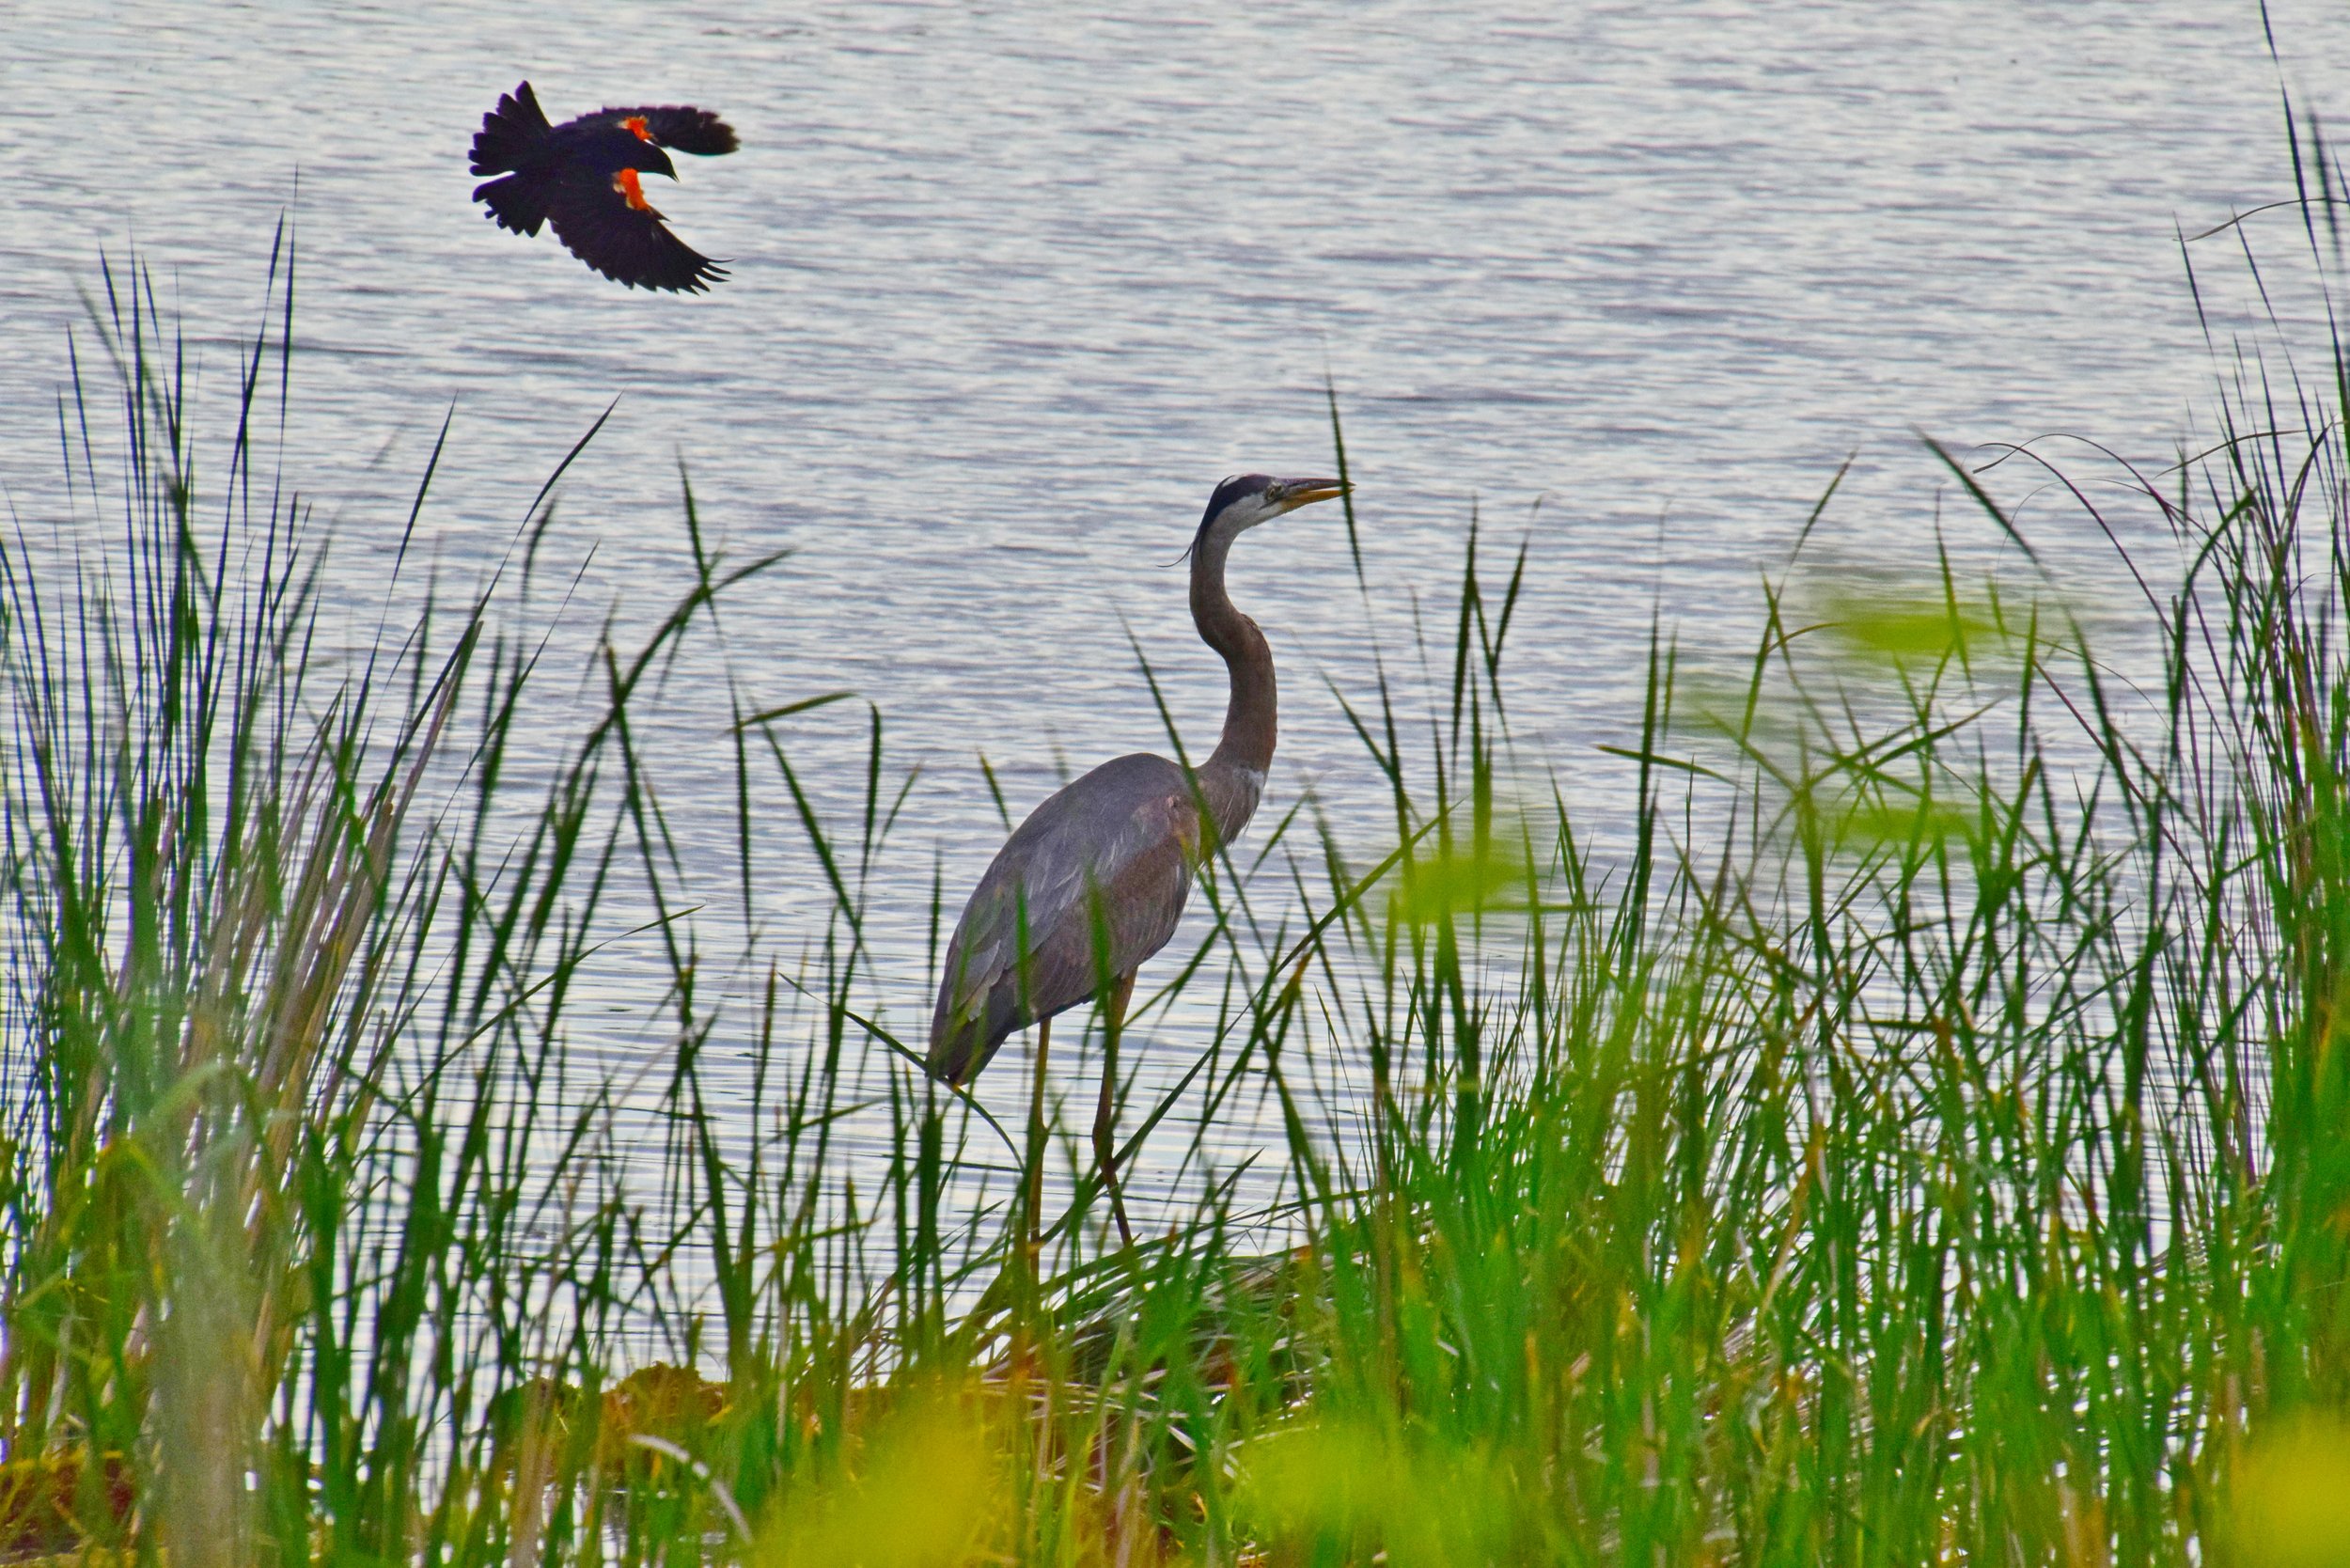 Hatchery heron & Black Bird.jpg